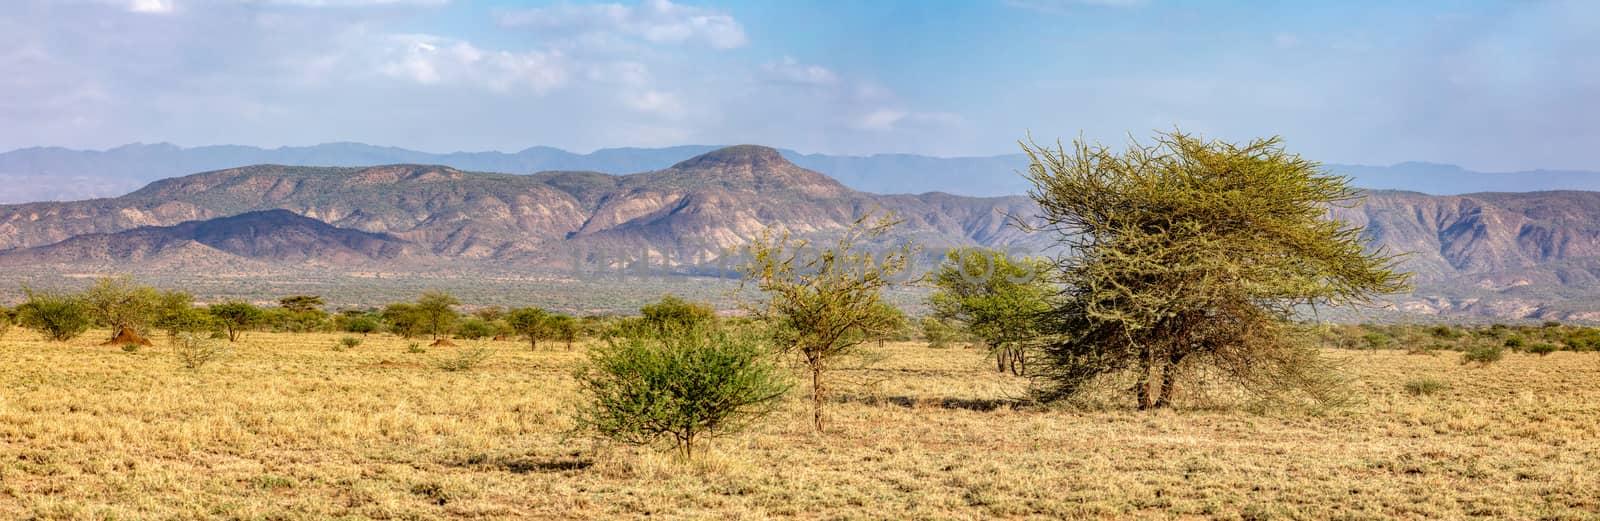 savanna in the Awash National Park, Ethiopia by artush